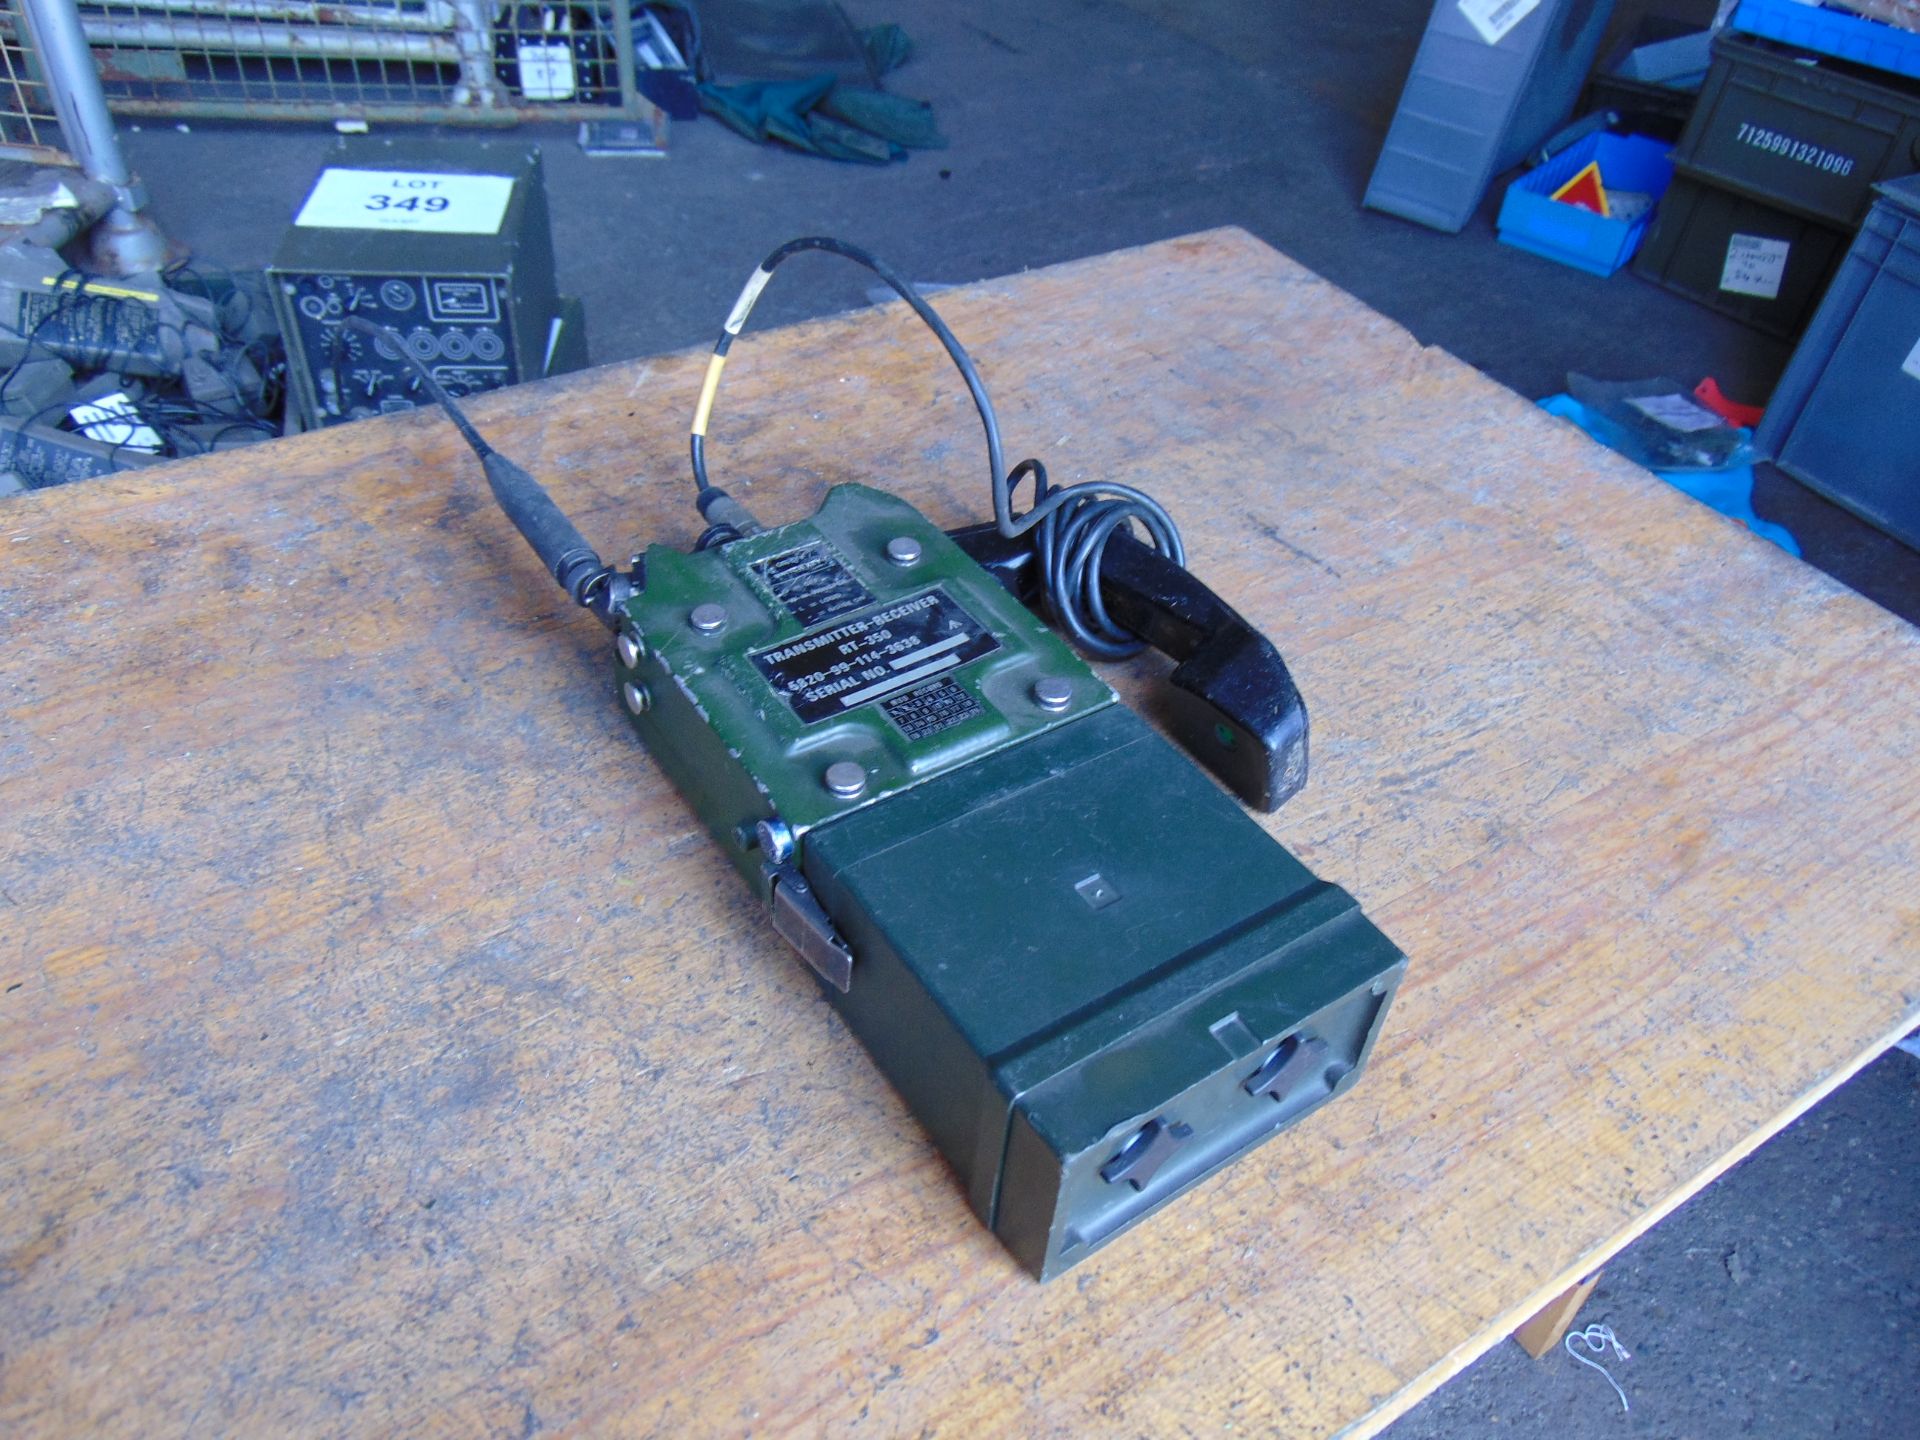 Clansman UK/RT 350 Transmitter Receiver c/w Battery Pack, Antenna & Handset - Image 3 of 4